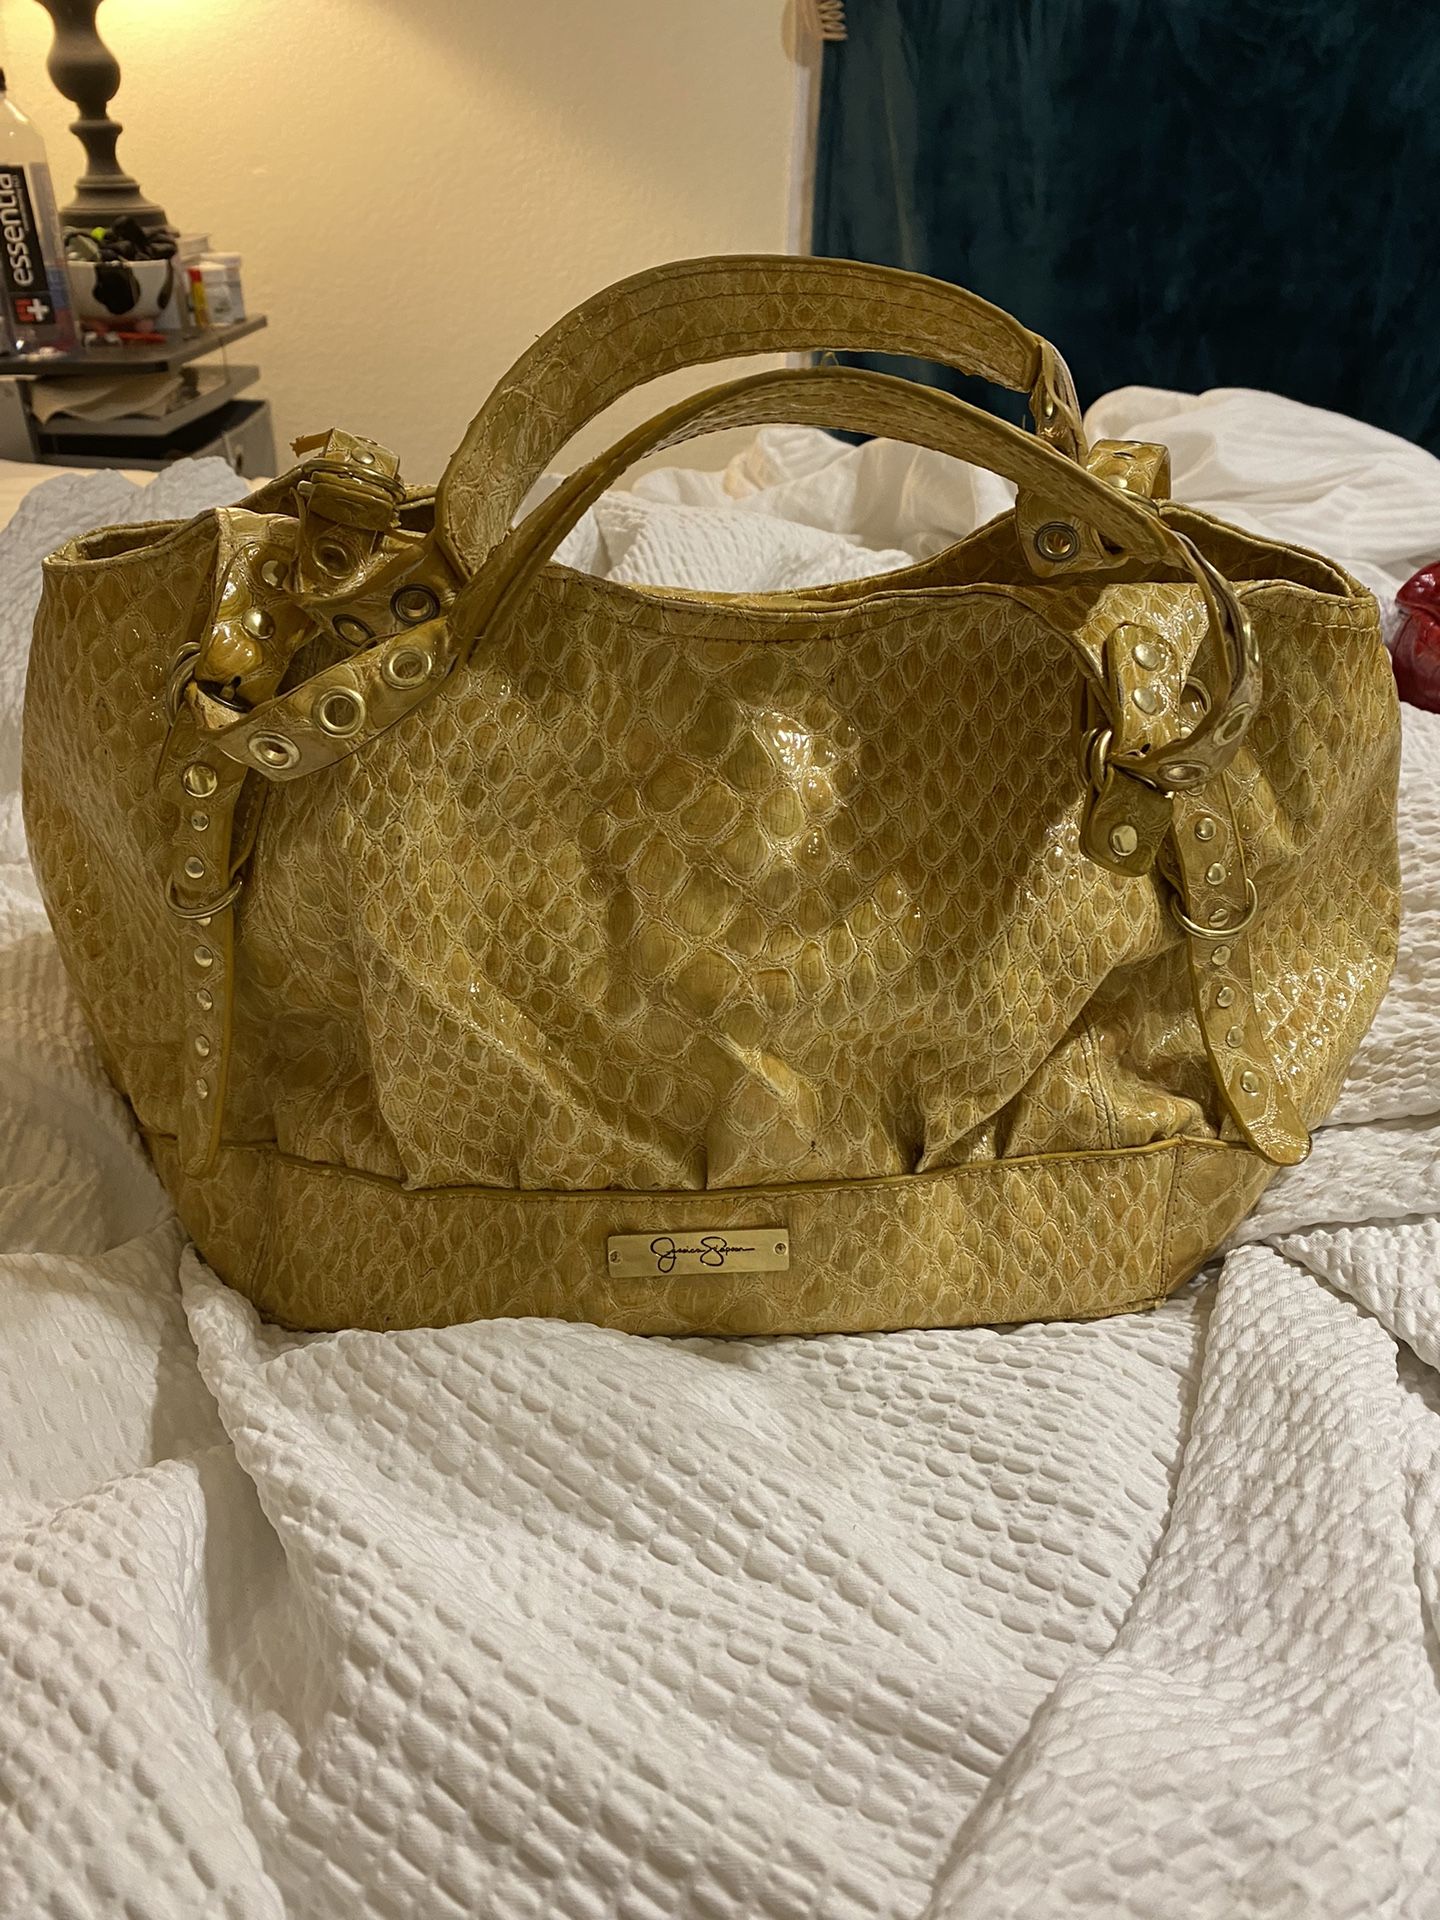 Jessica Simpson Bag Taking Reasonable Offers for Sale in Phoenix, AZ -  OfferUp